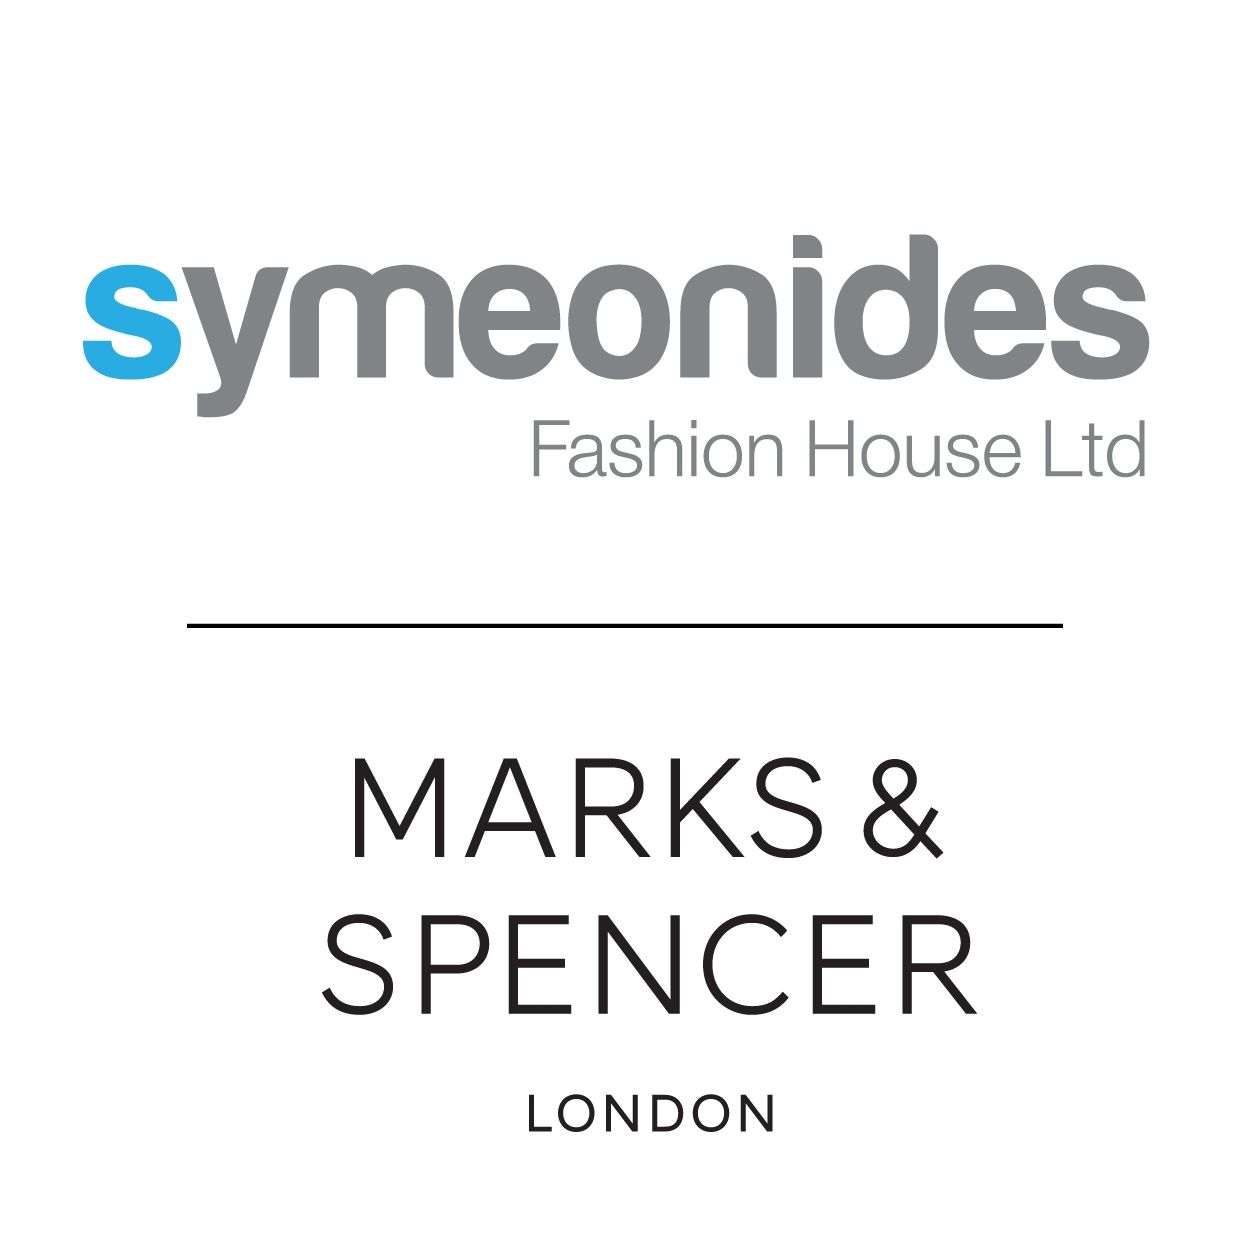 Symeonides Fashion House Ltd  – Marks & Spencer